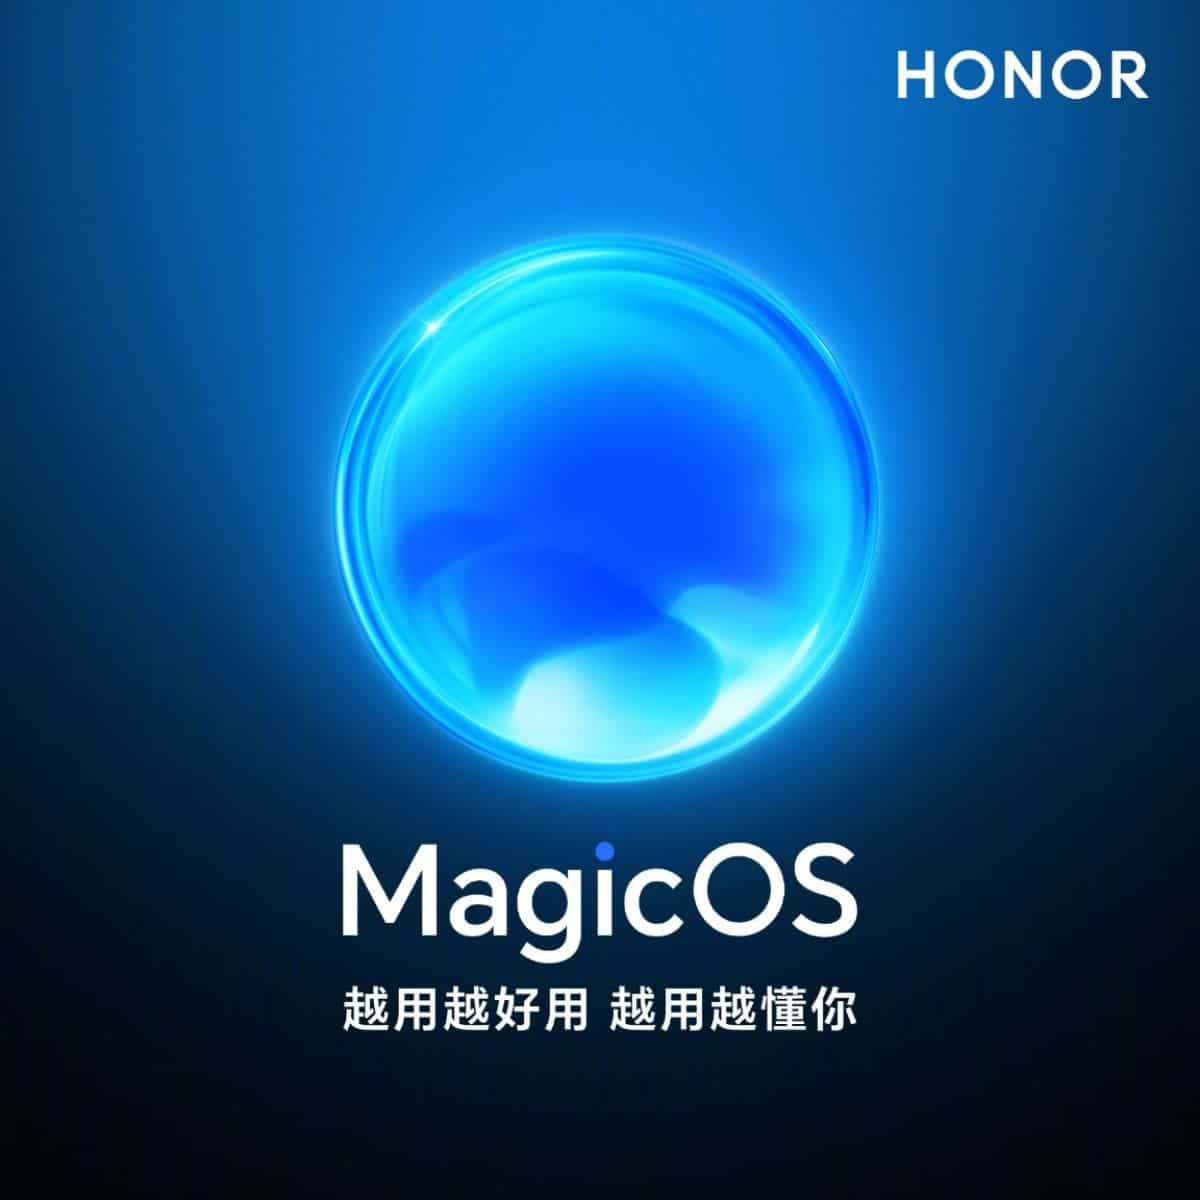 Honor's custtom MagicOS 8.0